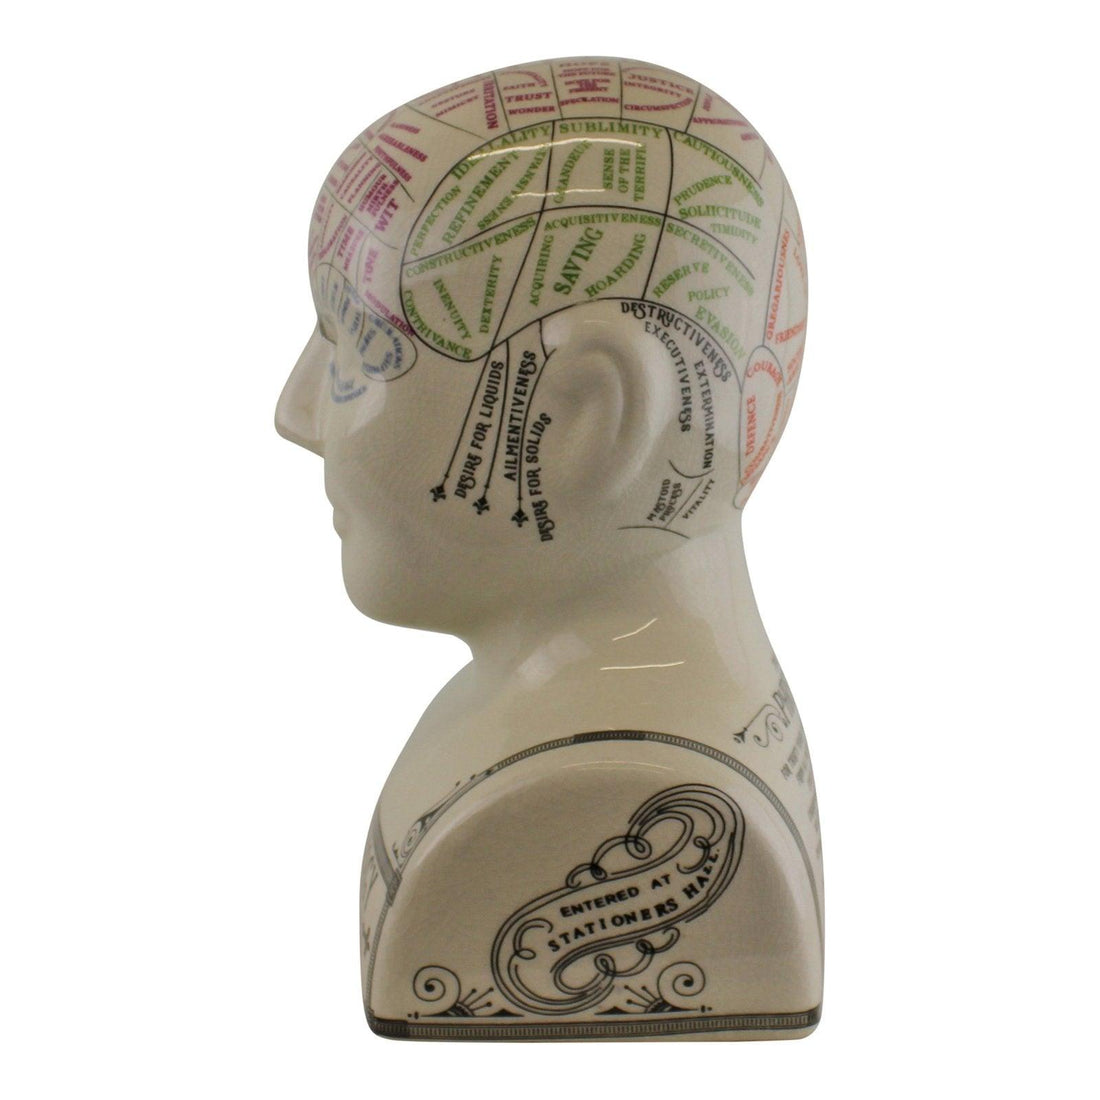 Large Ceramic Crackle Phrenology Head - £64.99 - Phrenology 